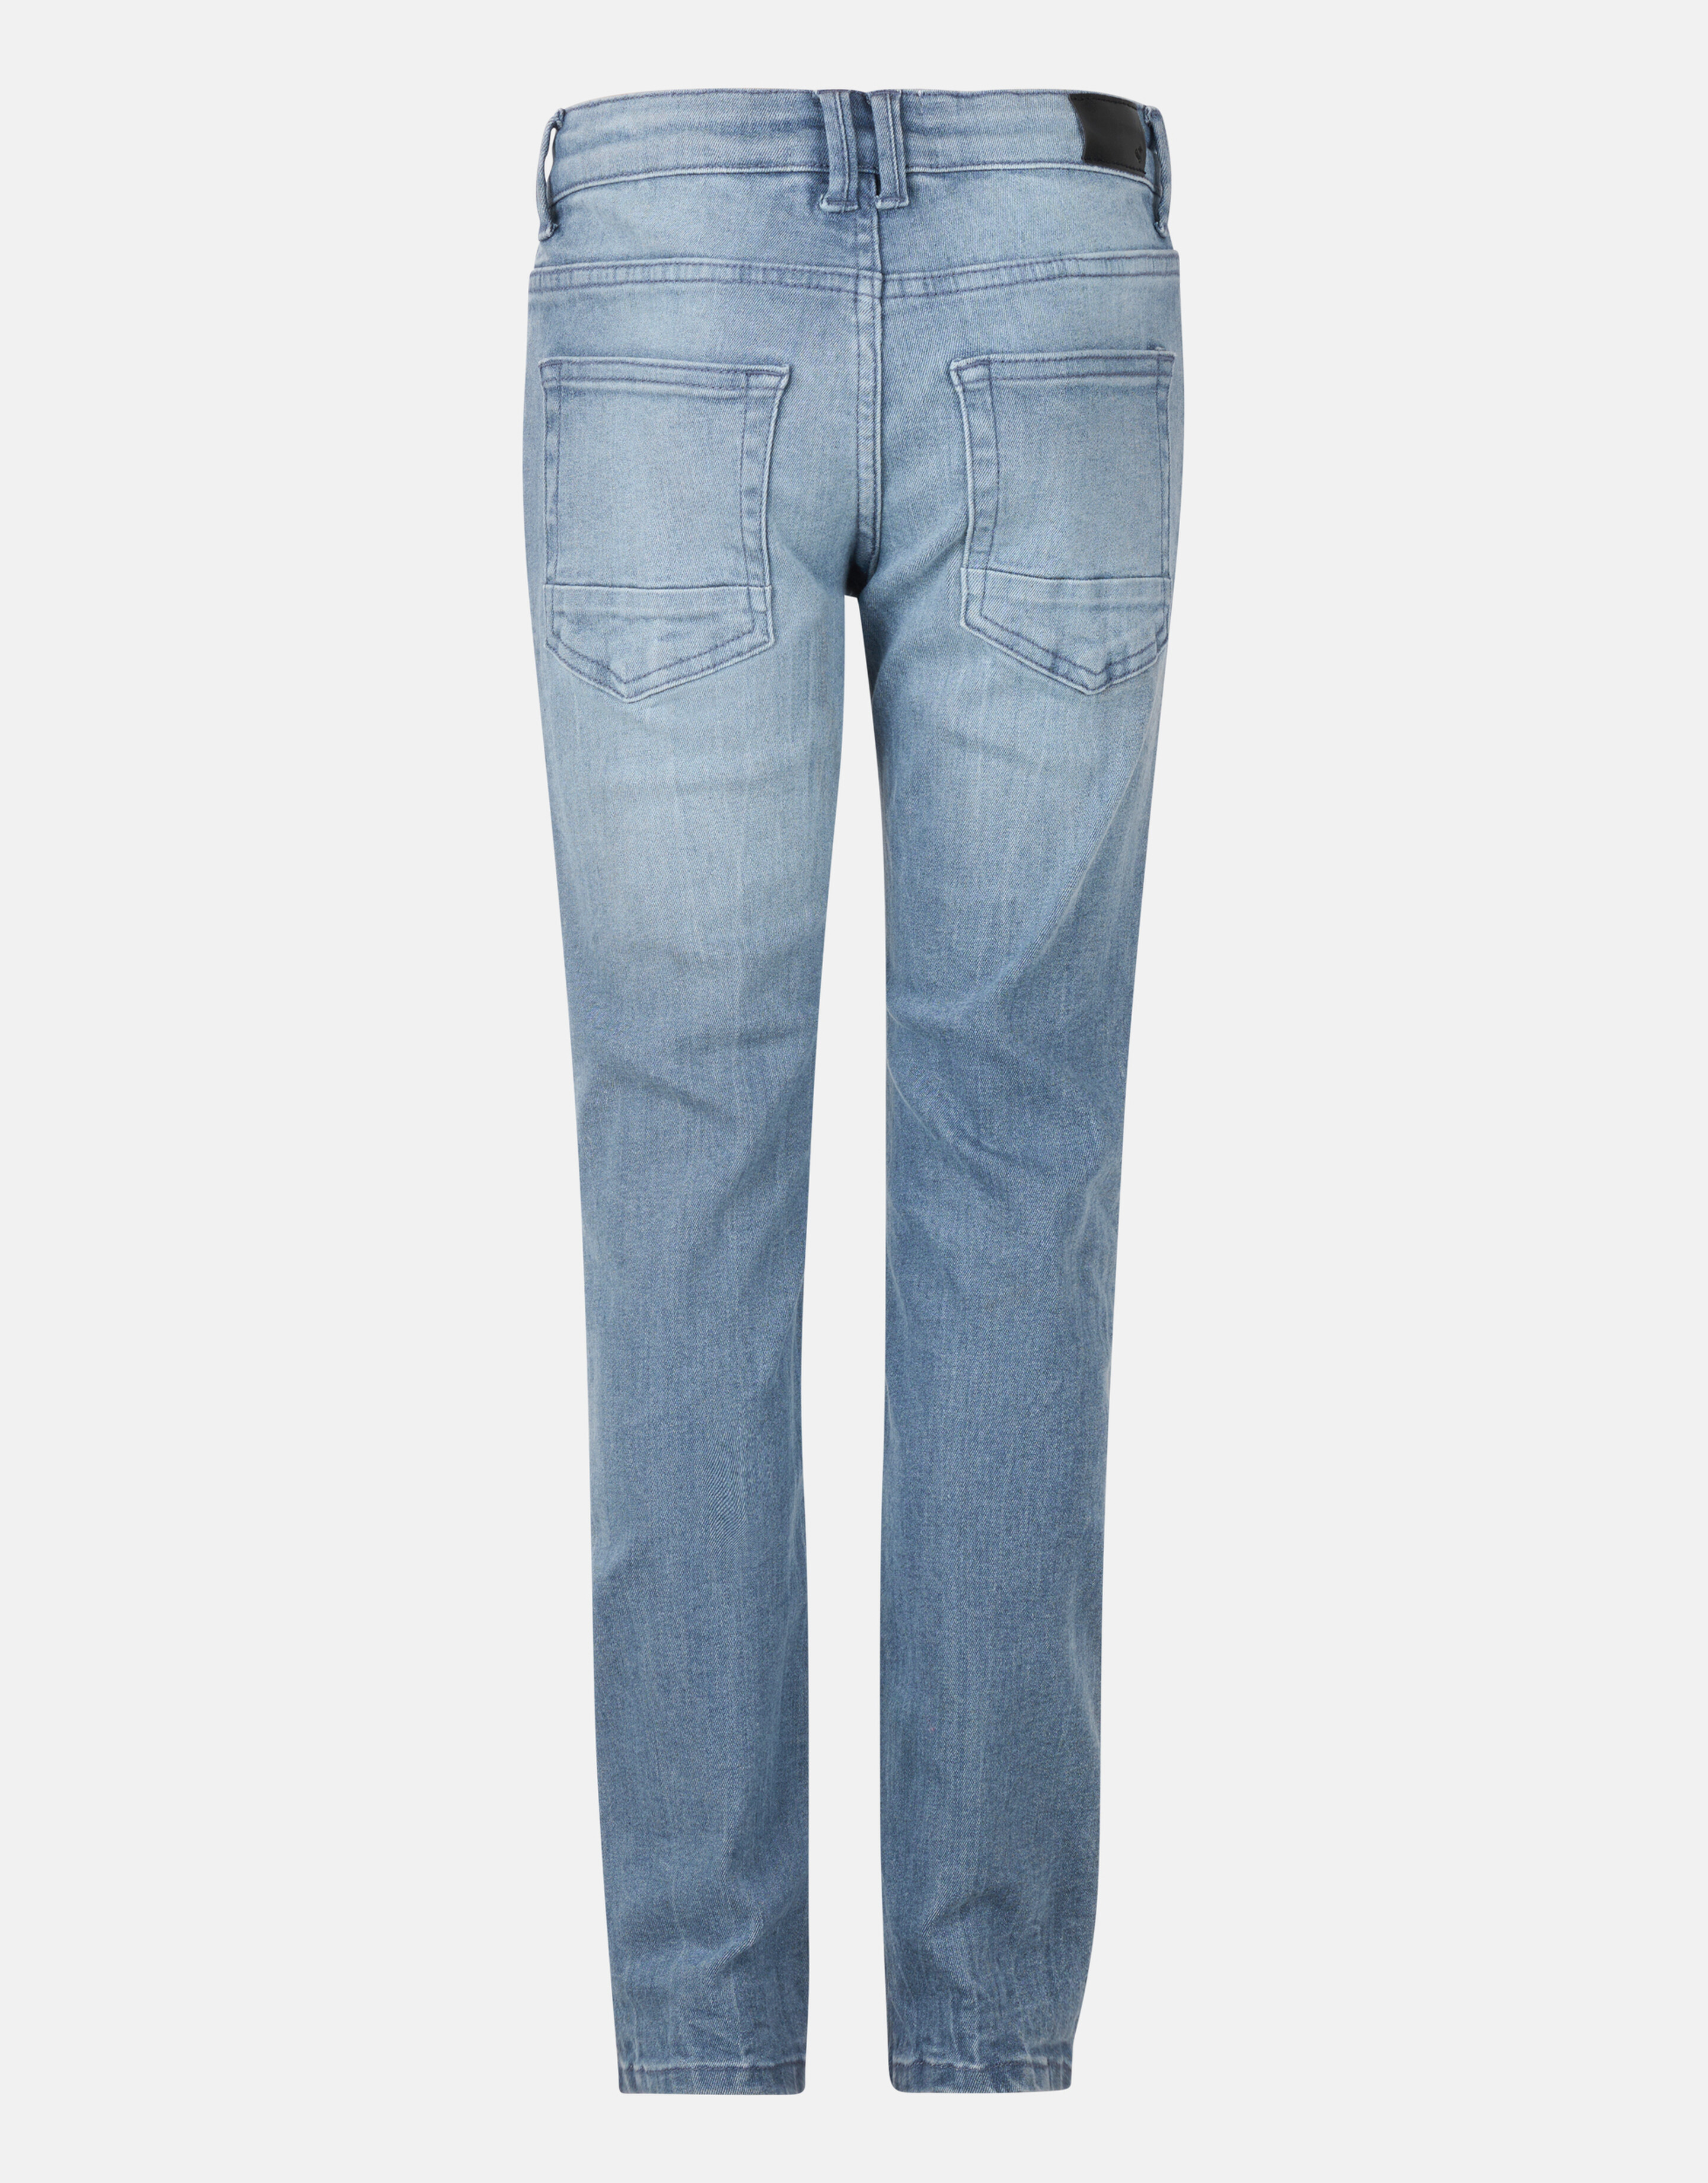 Jeans Regular Blau/Grau SHOEBY BOYS